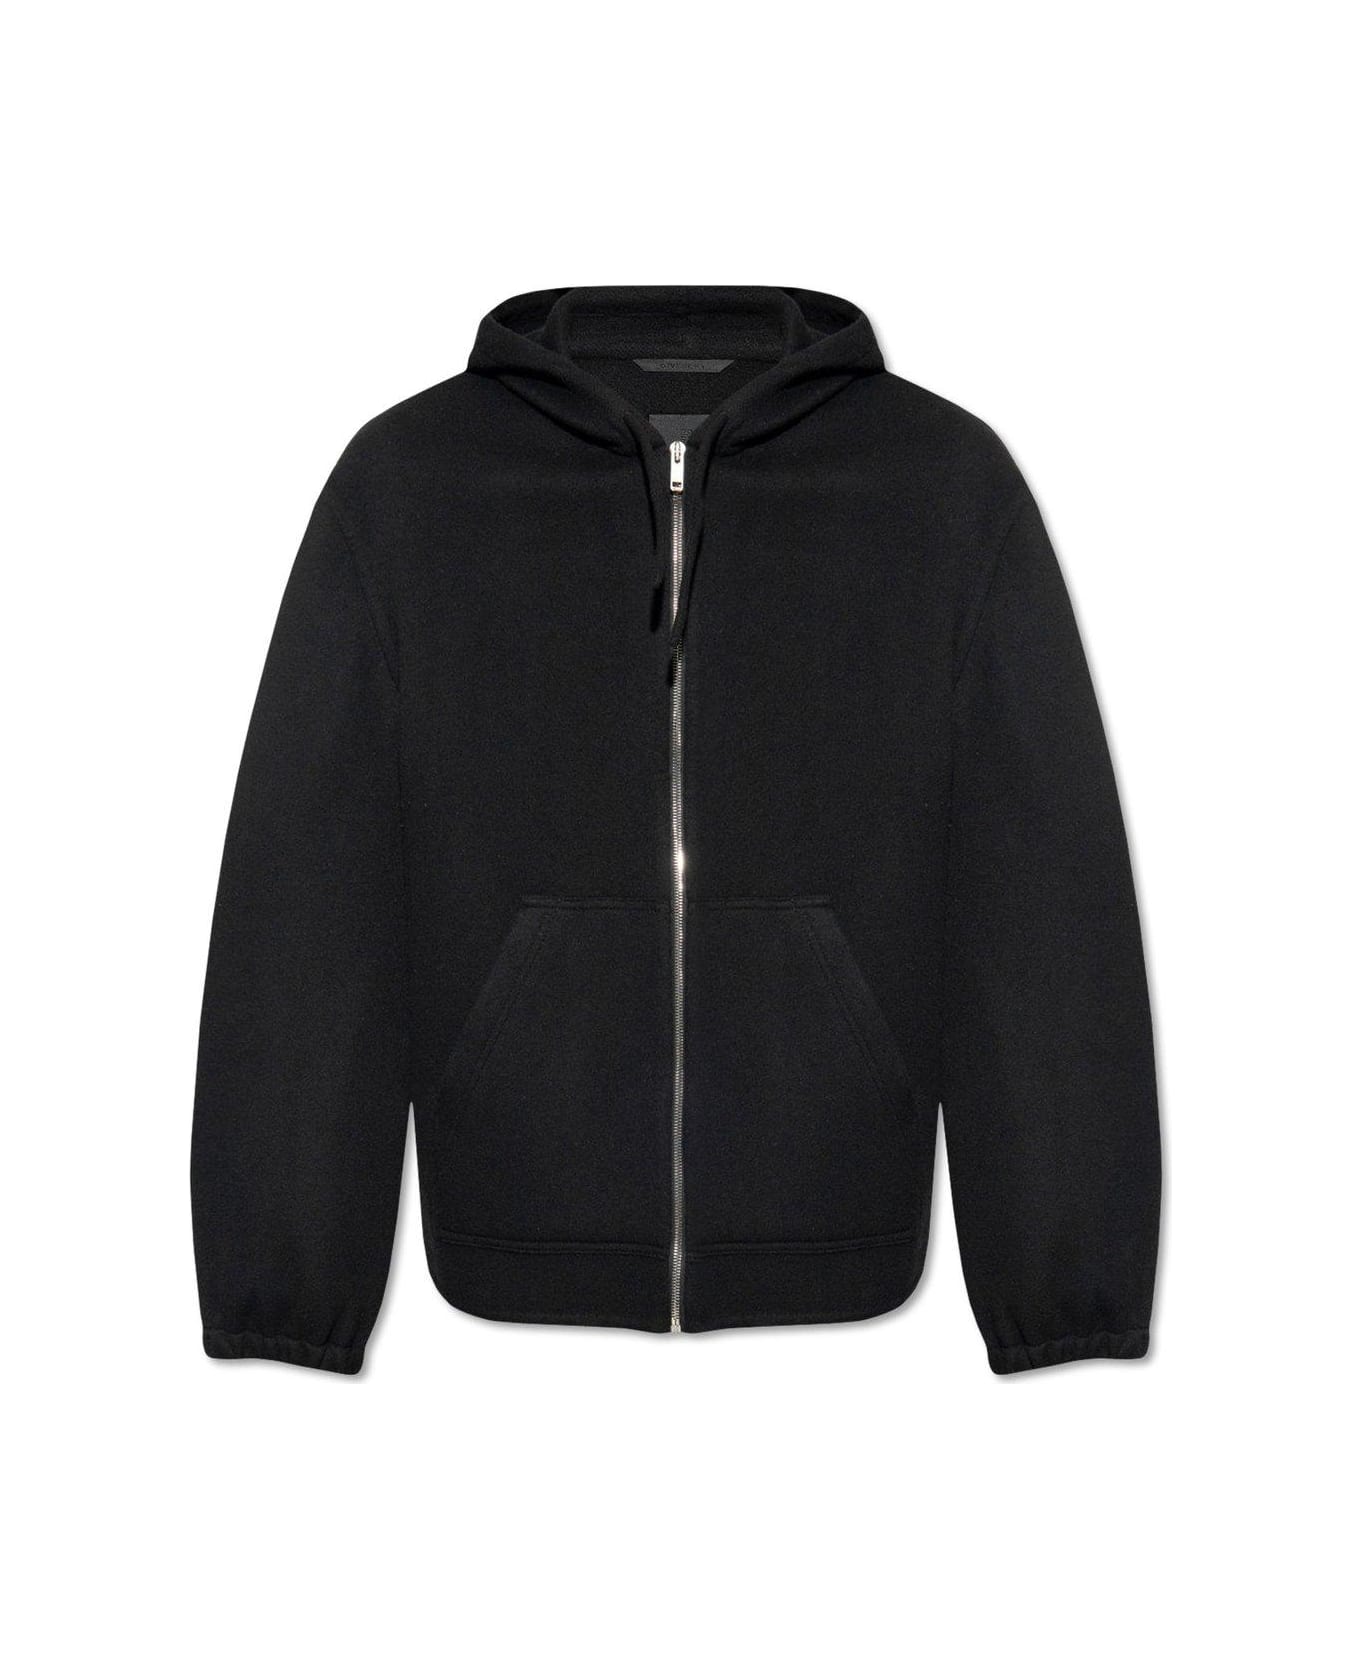 Givenchy Zip-up Hooded Jacket - Black